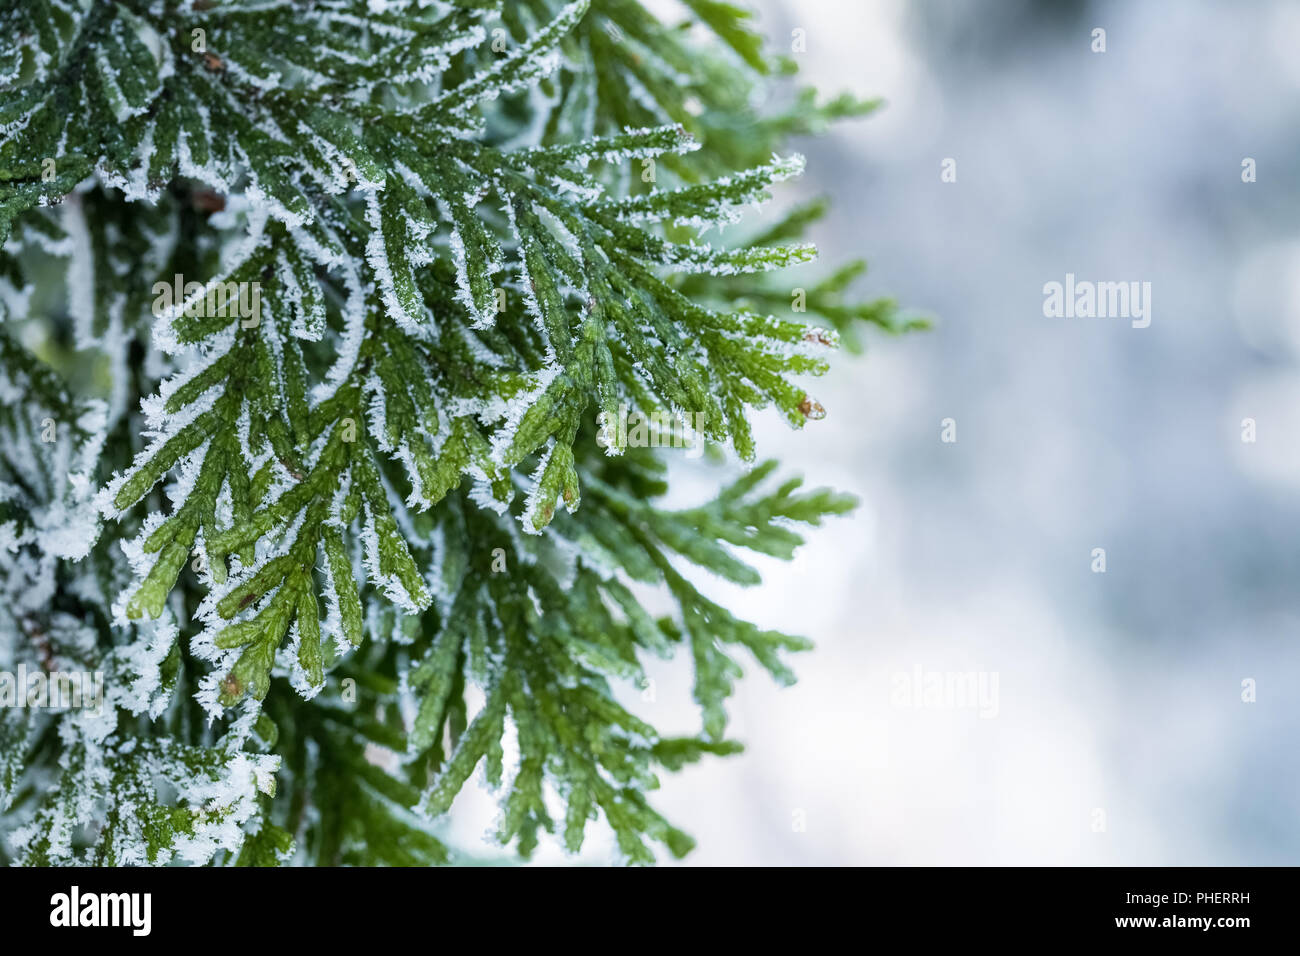 Winter Hintergrund Stockfoto